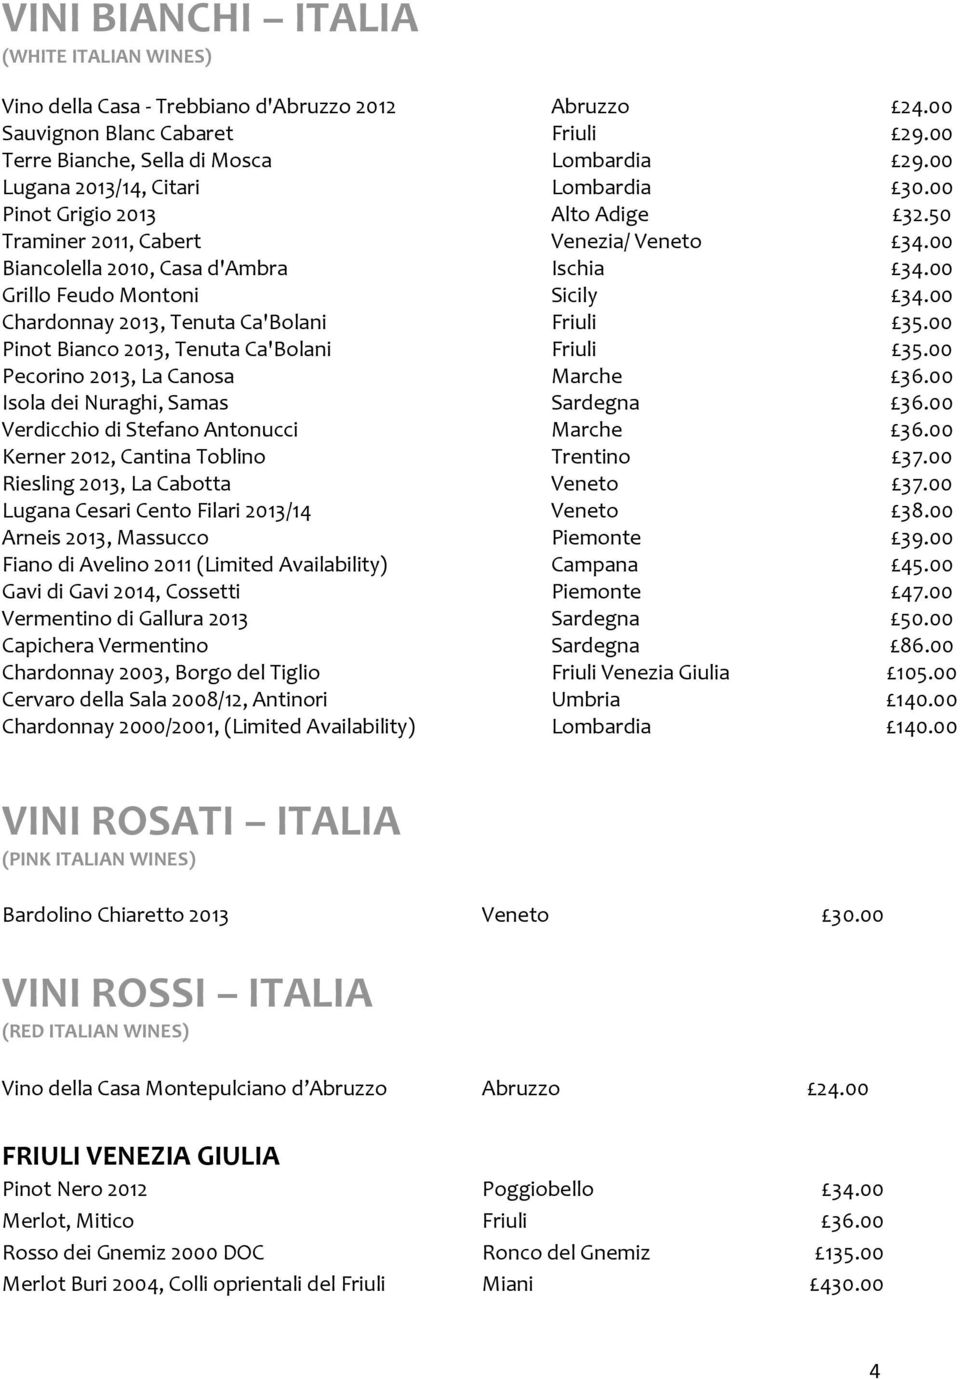 00 Chardonnay 2013, Tenuta Ca'Bolani Friuli 35.00 Pinot Bianco 2013, Tenuta Ca'Bolani Friuli 35.00 Pecorino 2013, La Canosa Marche 36.00 Isola dei Nuraghi, Samas Sardegna 36.